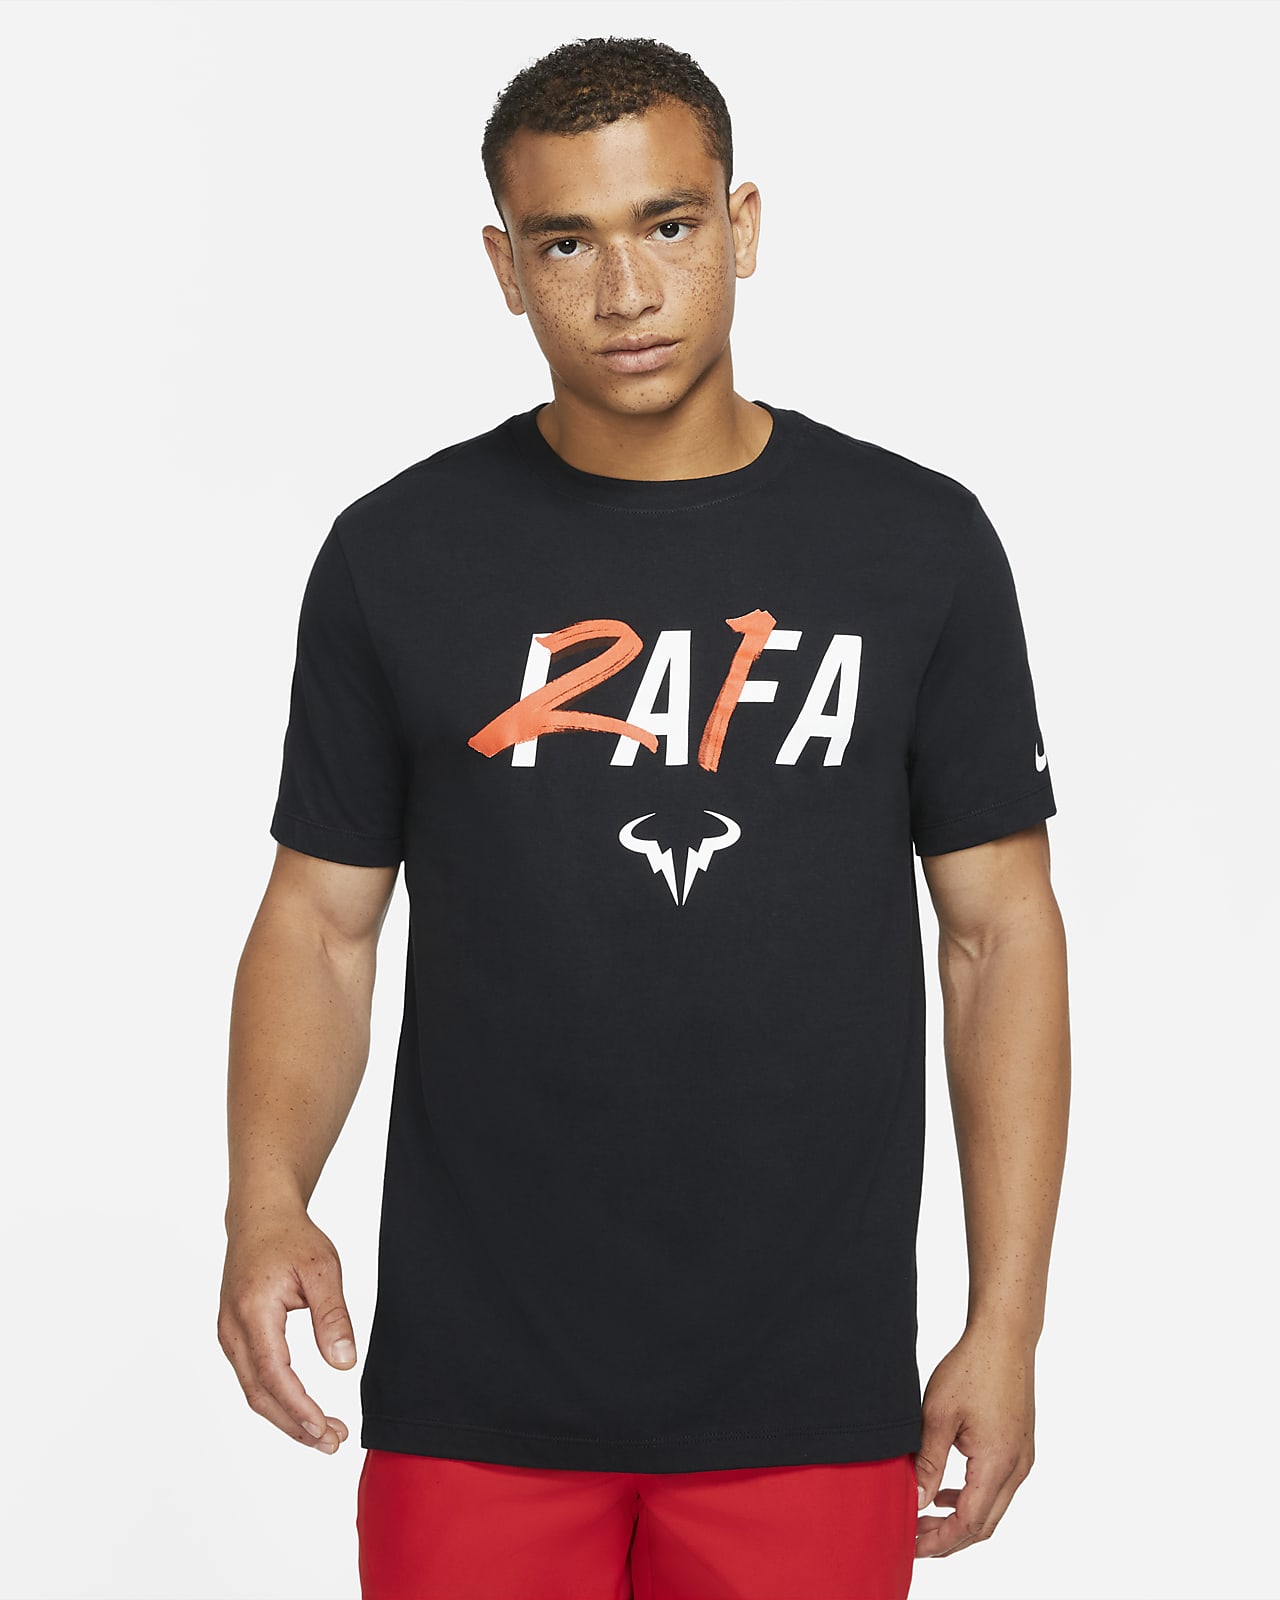 Rafa Nadal Academy Women's Black T-shirt